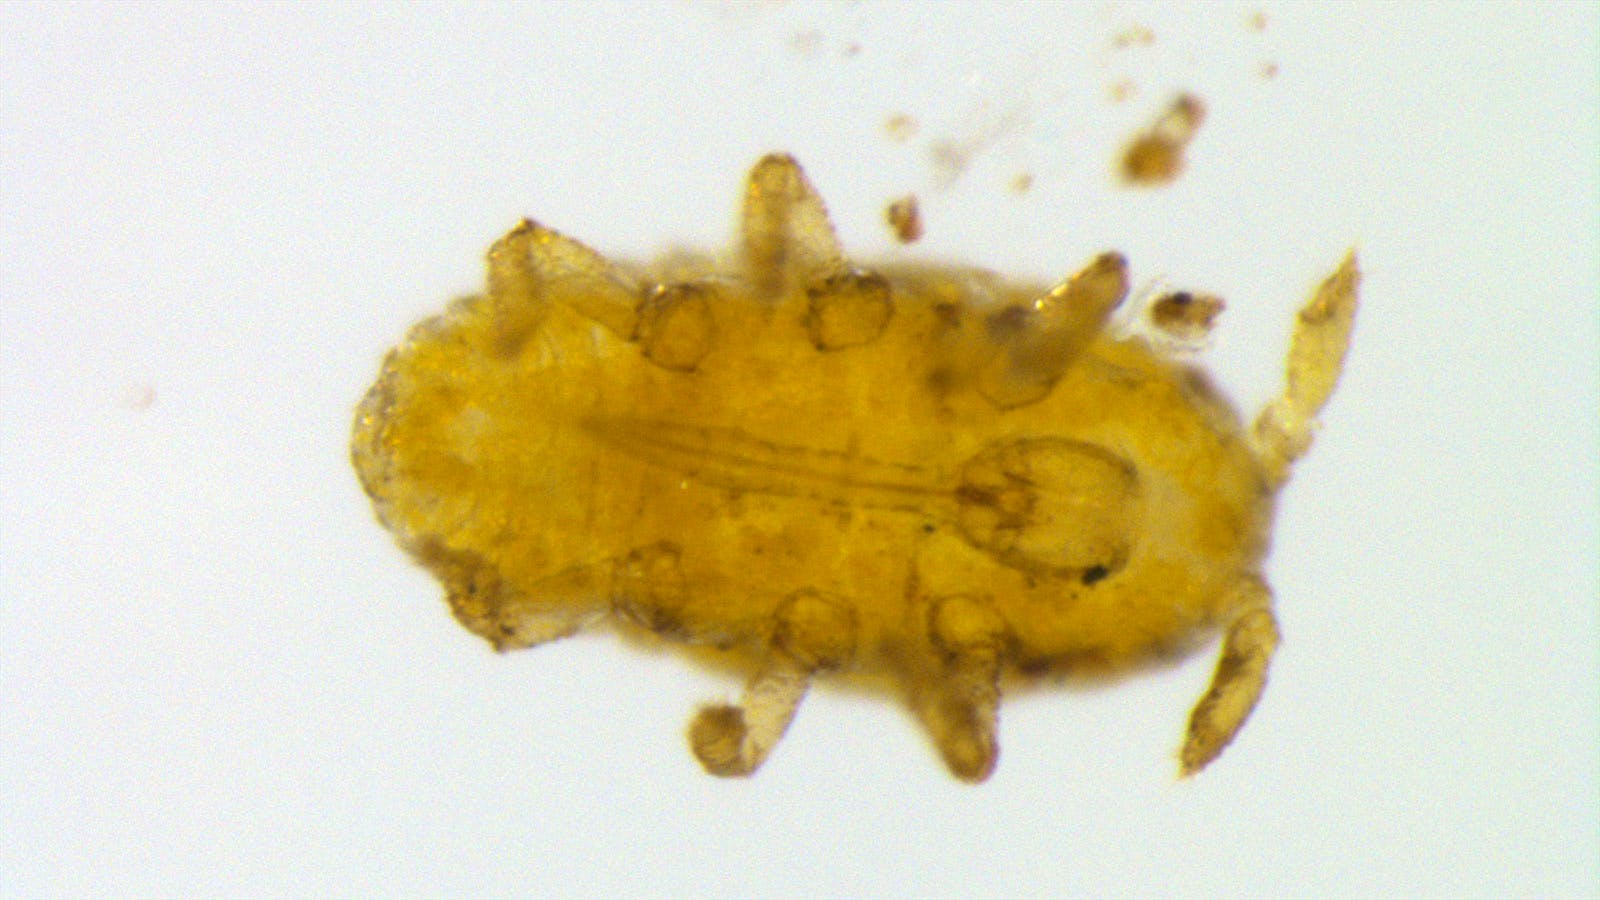 Phylloxera louse